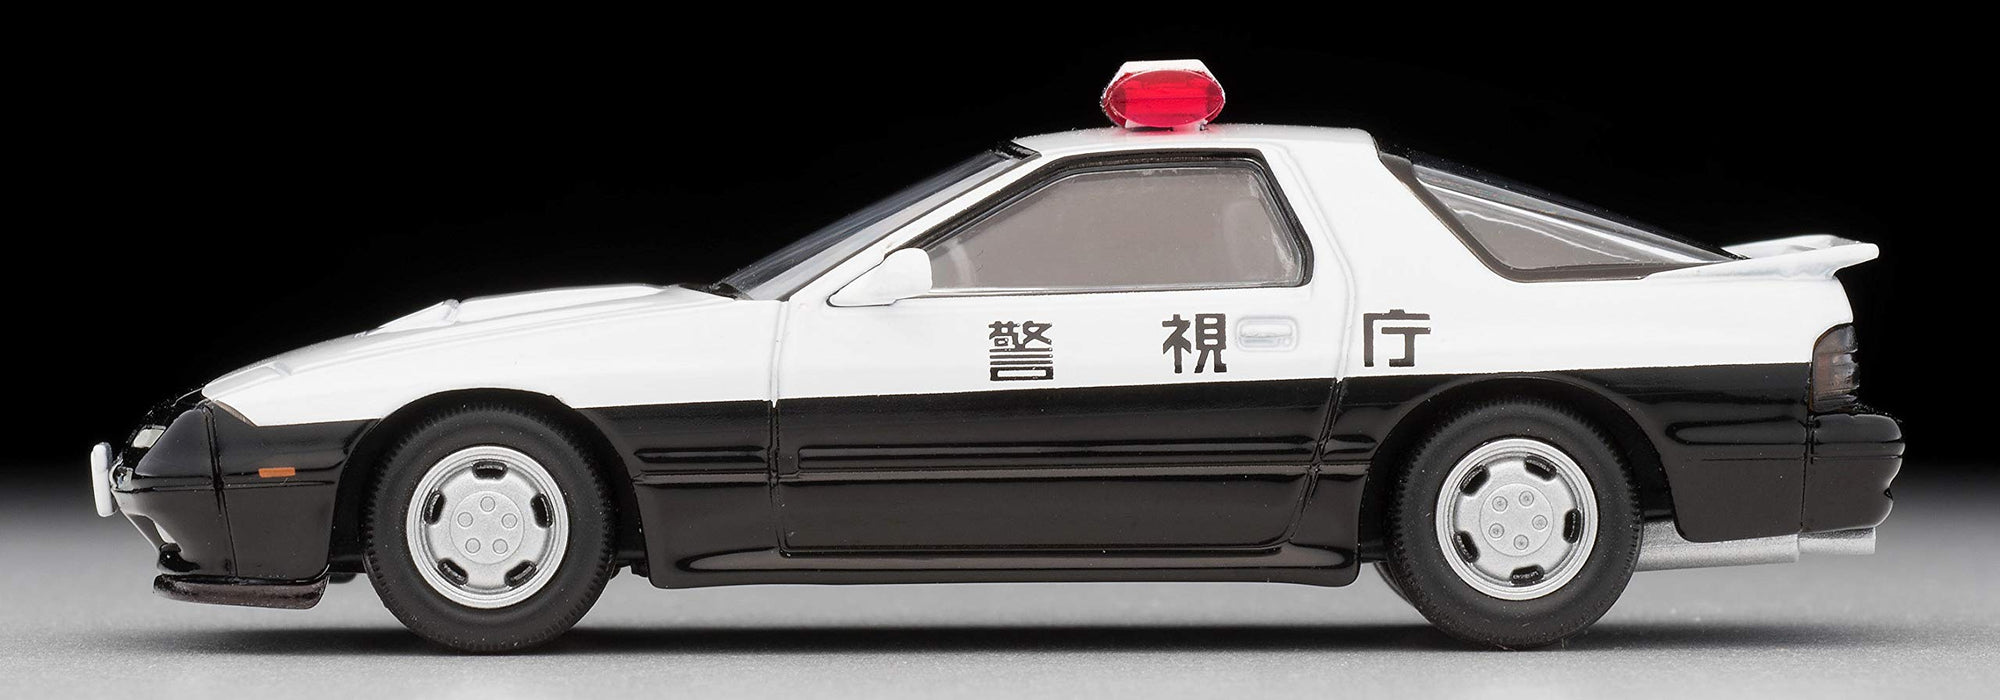 Tomytec Lv-N214a Tomica Limited Vintage Neo Mazda Savanna Rx-7 Patrol Car 1/64 Scale Police Cars